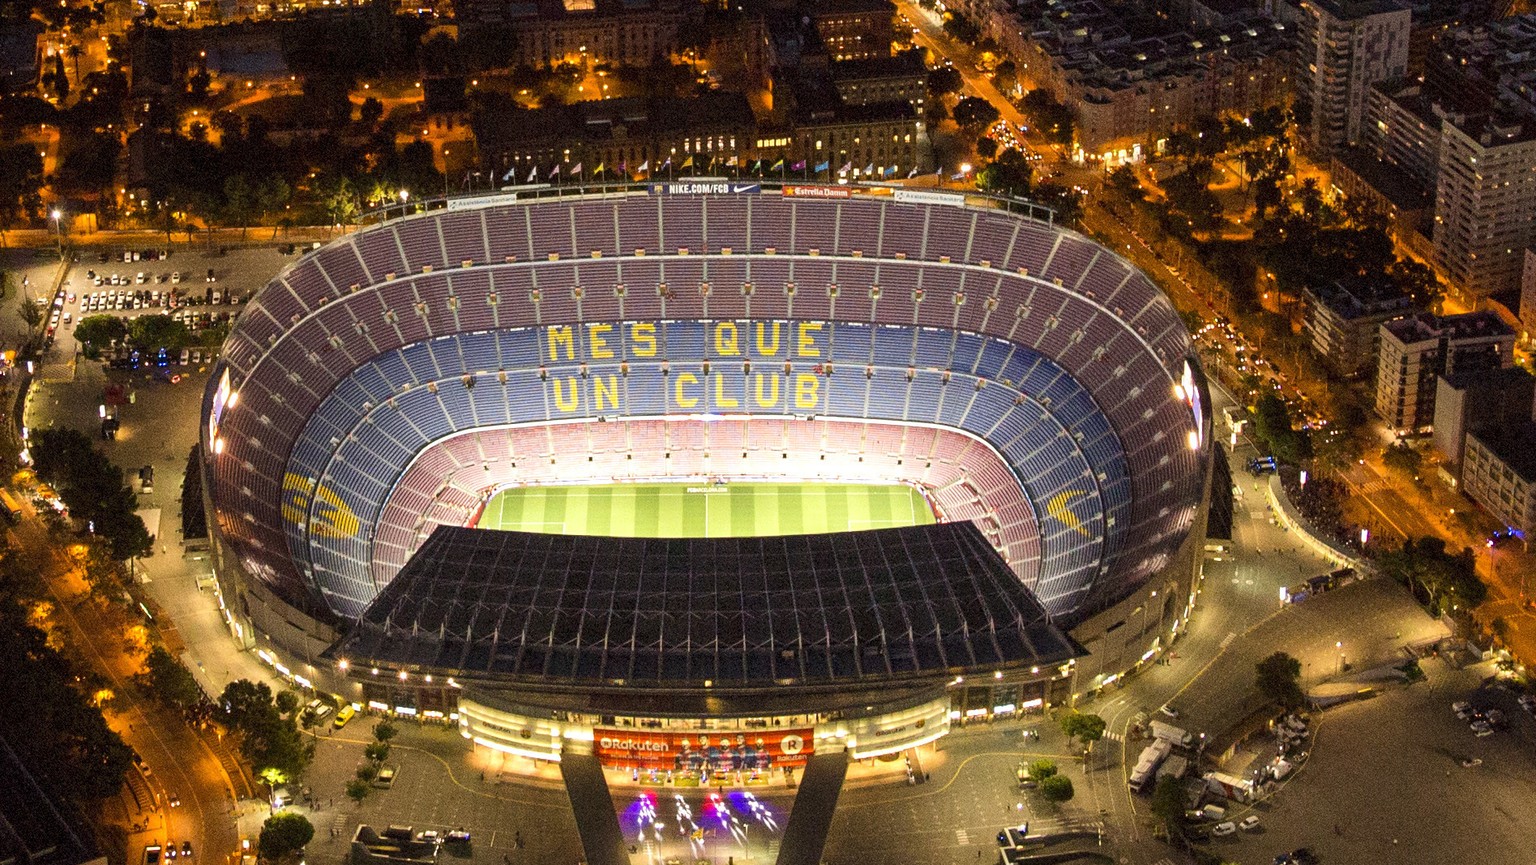 FILE - In this Tuesday, Sept. 19, 2017 file photo, the Camp Nou stadium is illuminated in Barcelona, Spain. (AP Photo/Emilio Morenatti, File)